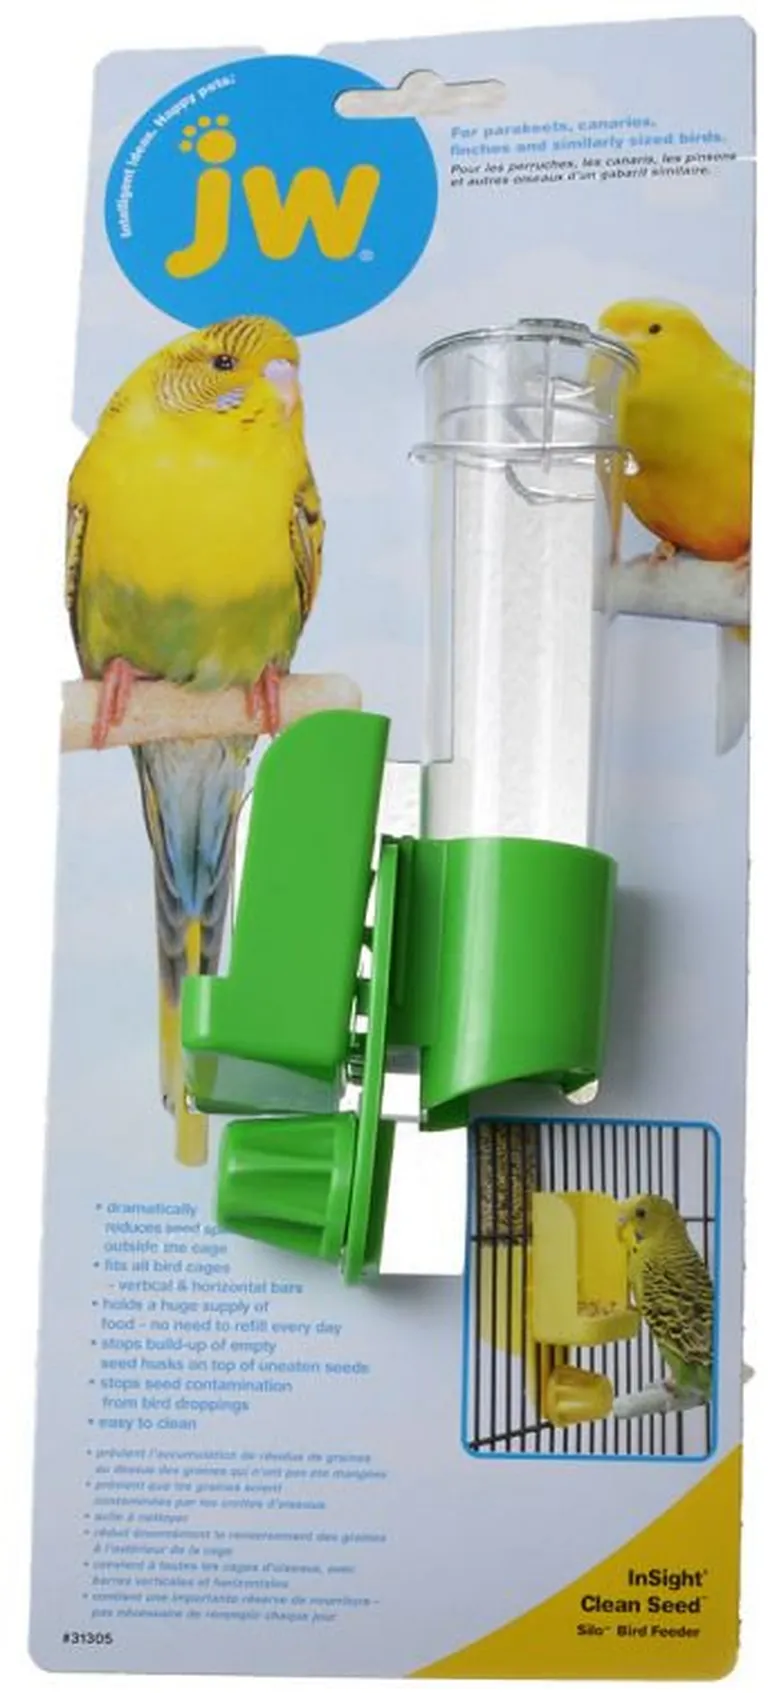 JW Pet Insight Clean Seed Silo Bird Feeder Photo 1